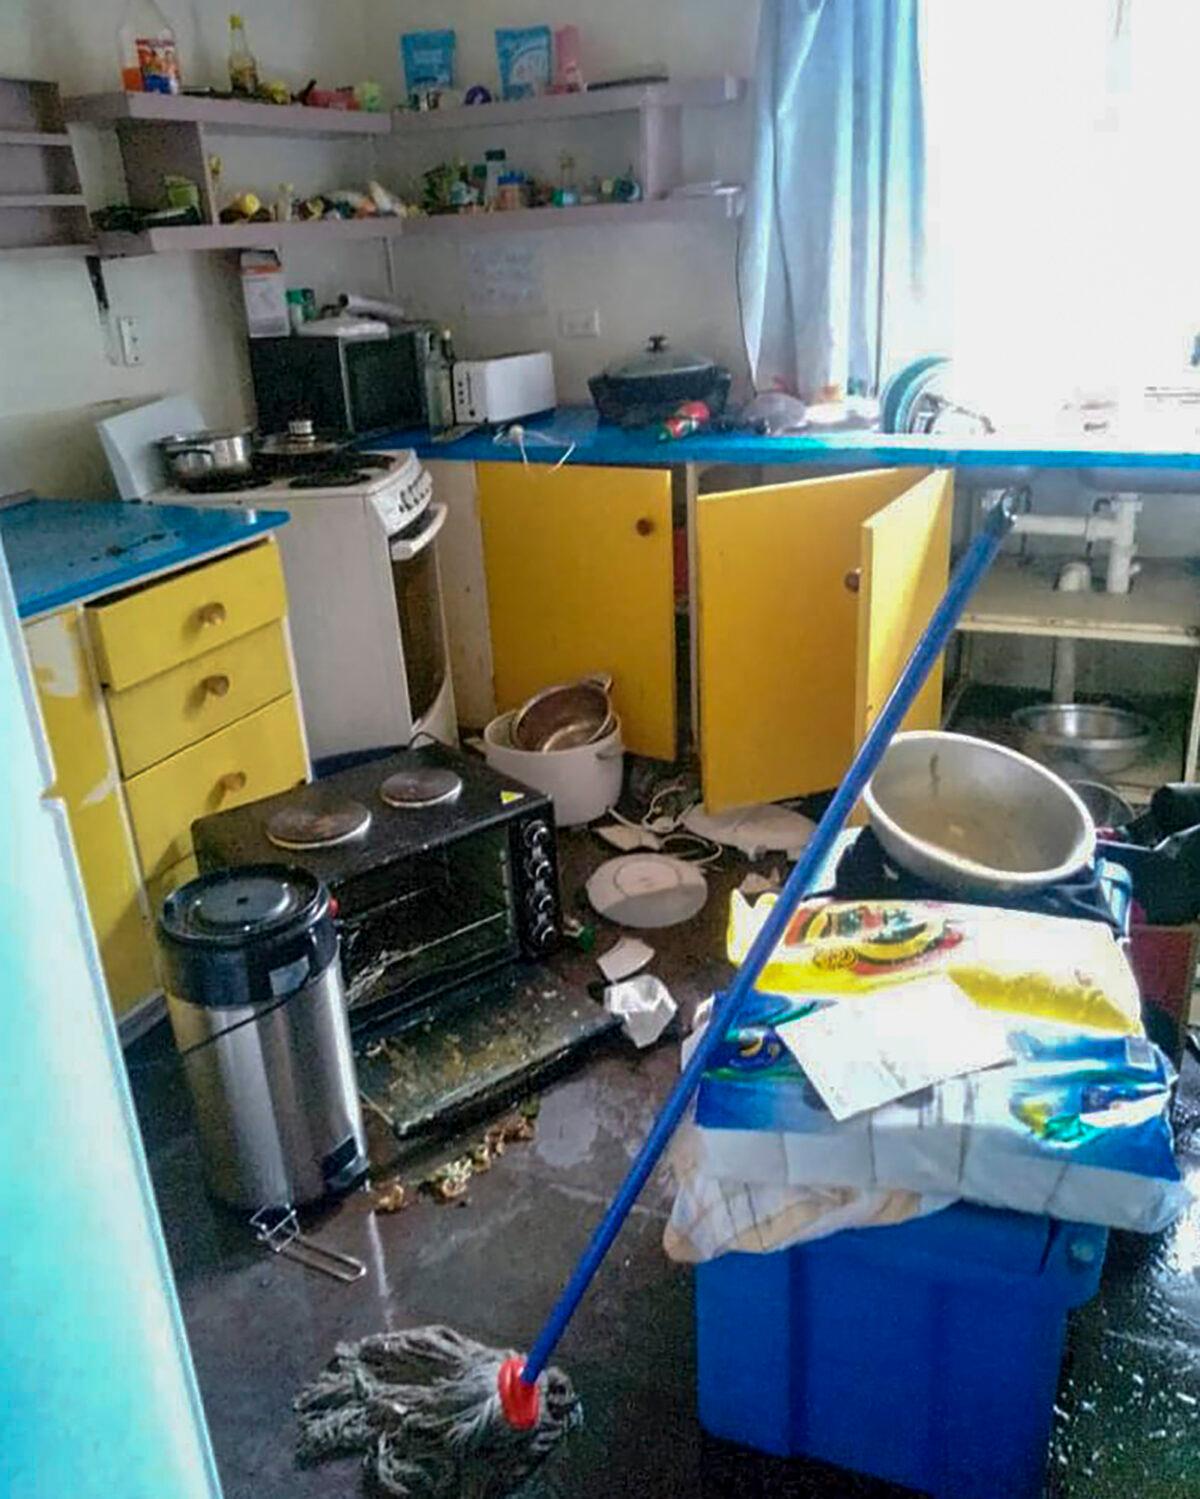 Debris lies strewn across the floor in the kitchen of Renagi Ravu's house in the town of Kainantu, following a strong earthquake in northeastern Papua New Guinea, on Sept. 11, 2022. (Renagi Ravu via AP)